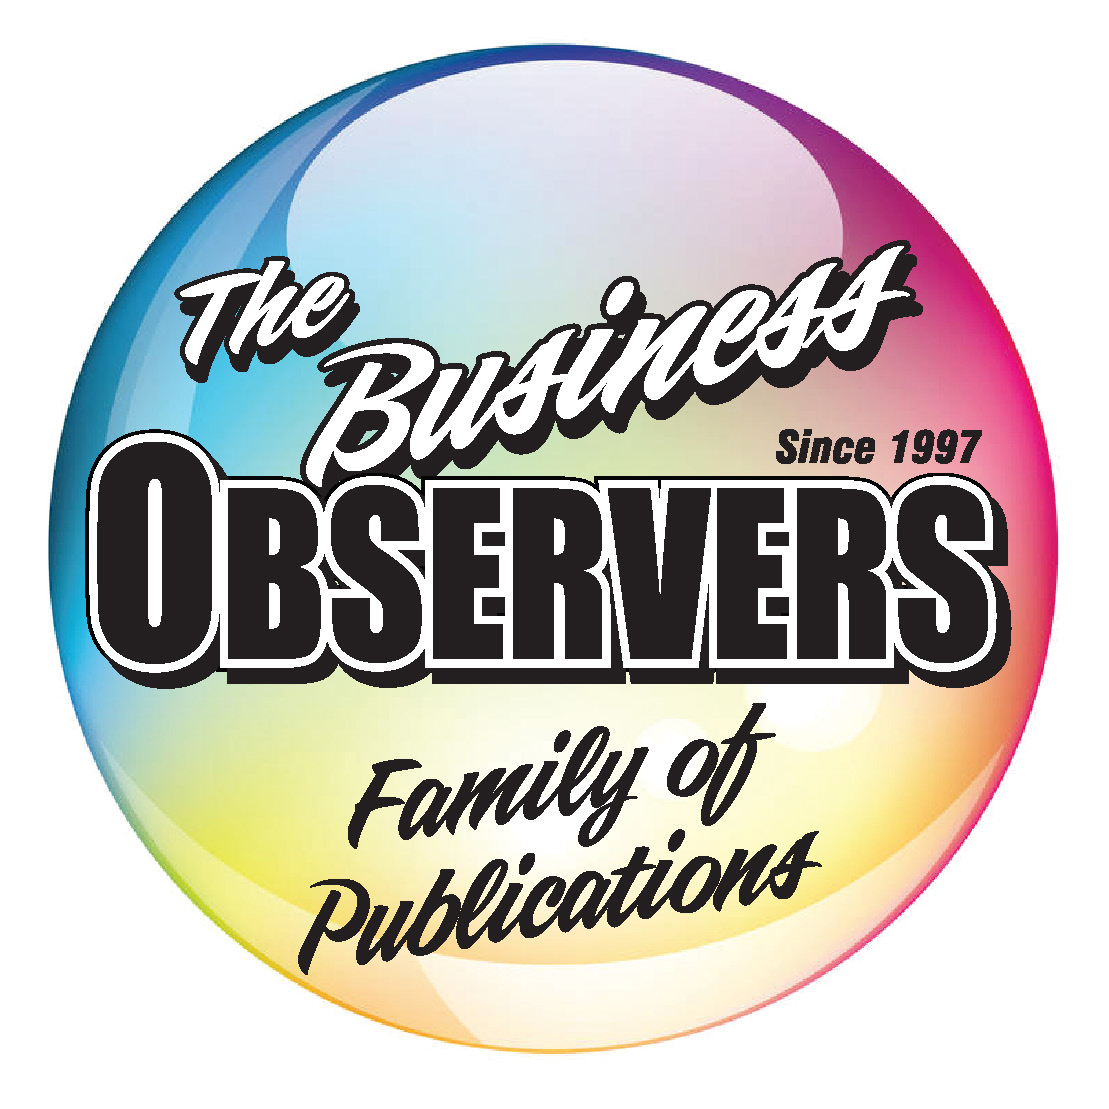 Business Observer Logo